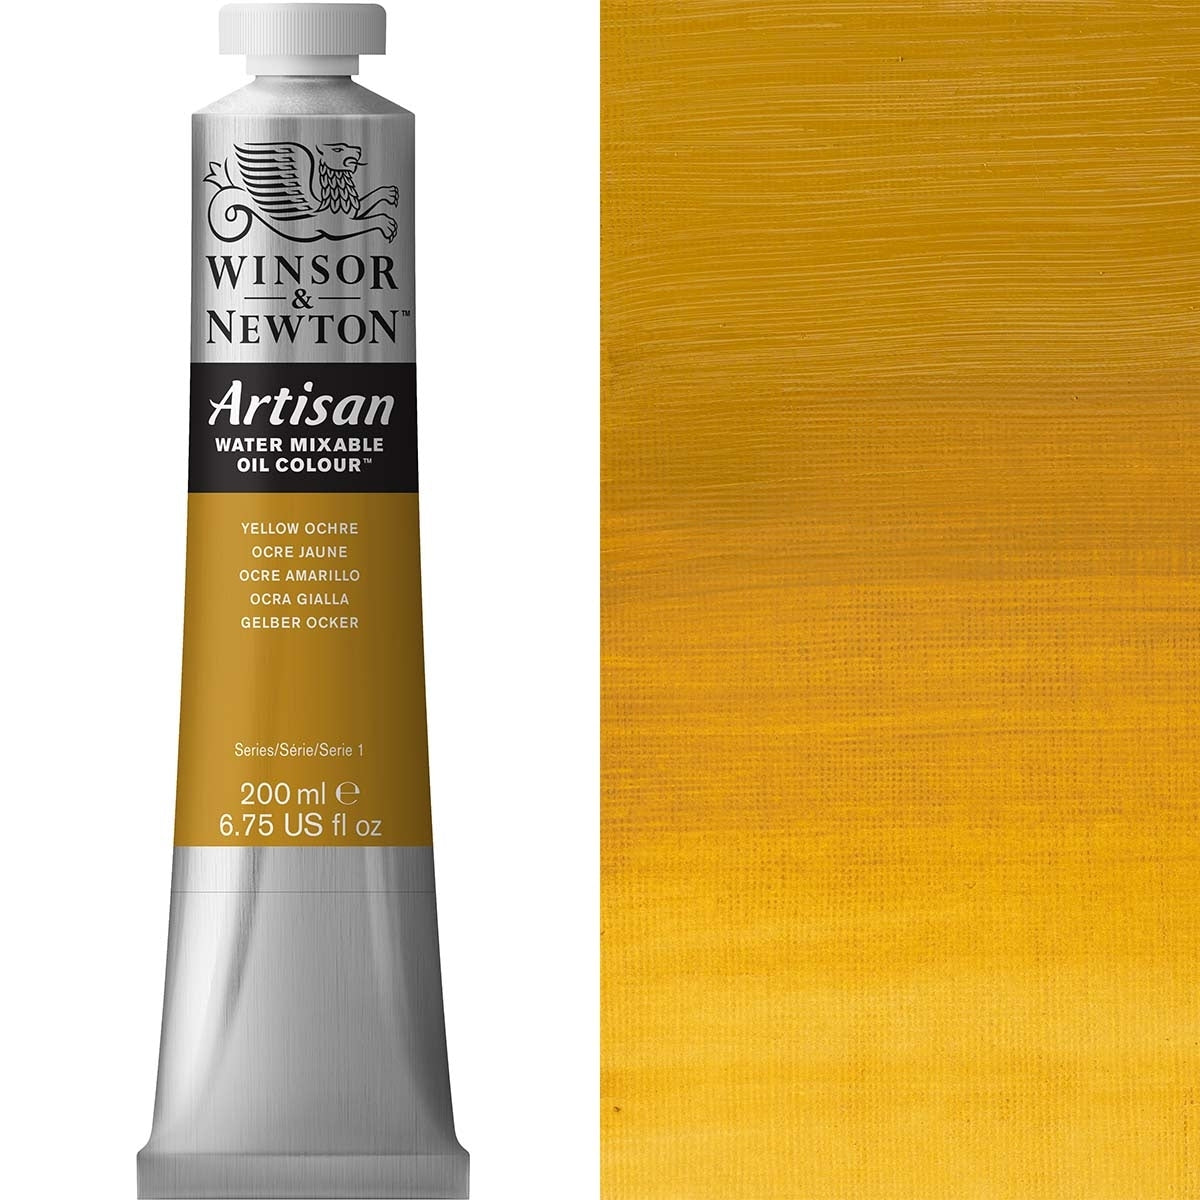 Winsor and Newton - Artisan Oil Colour Watermixable - 200ml - Yellow Ochre